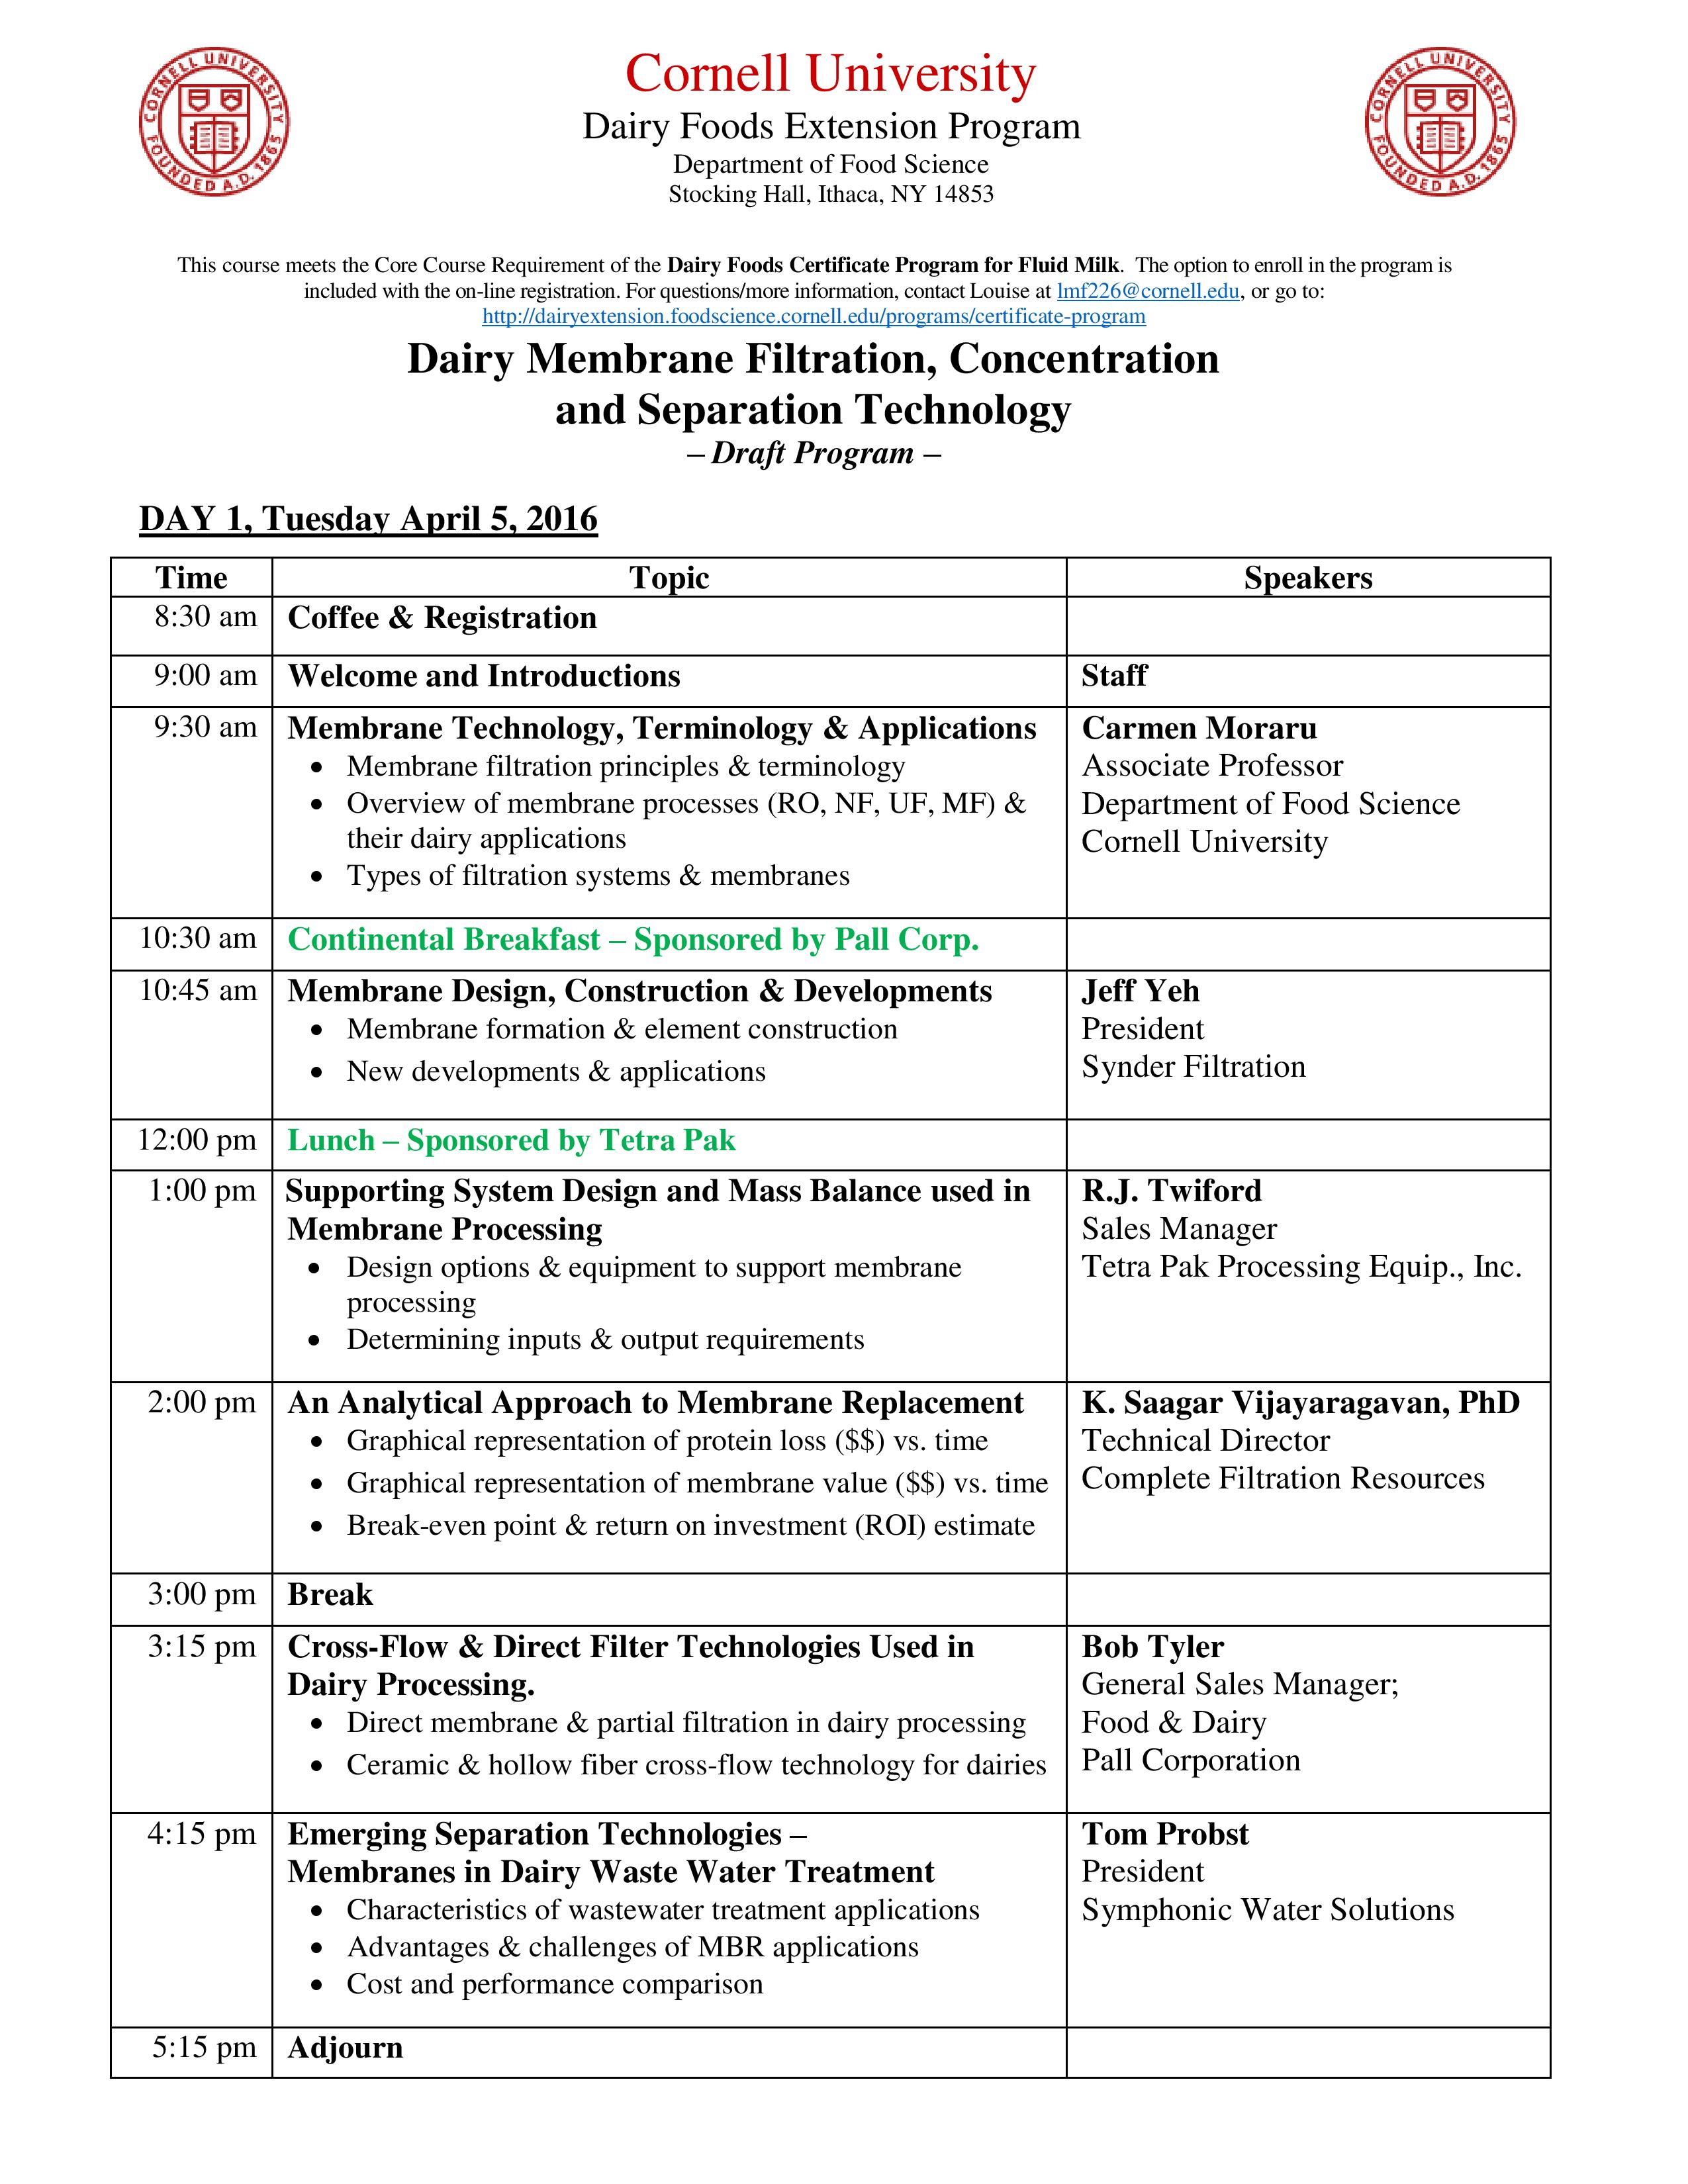 Membrane Filtration, Concentration, and Separation Technology Workshop  Agenda-page-002